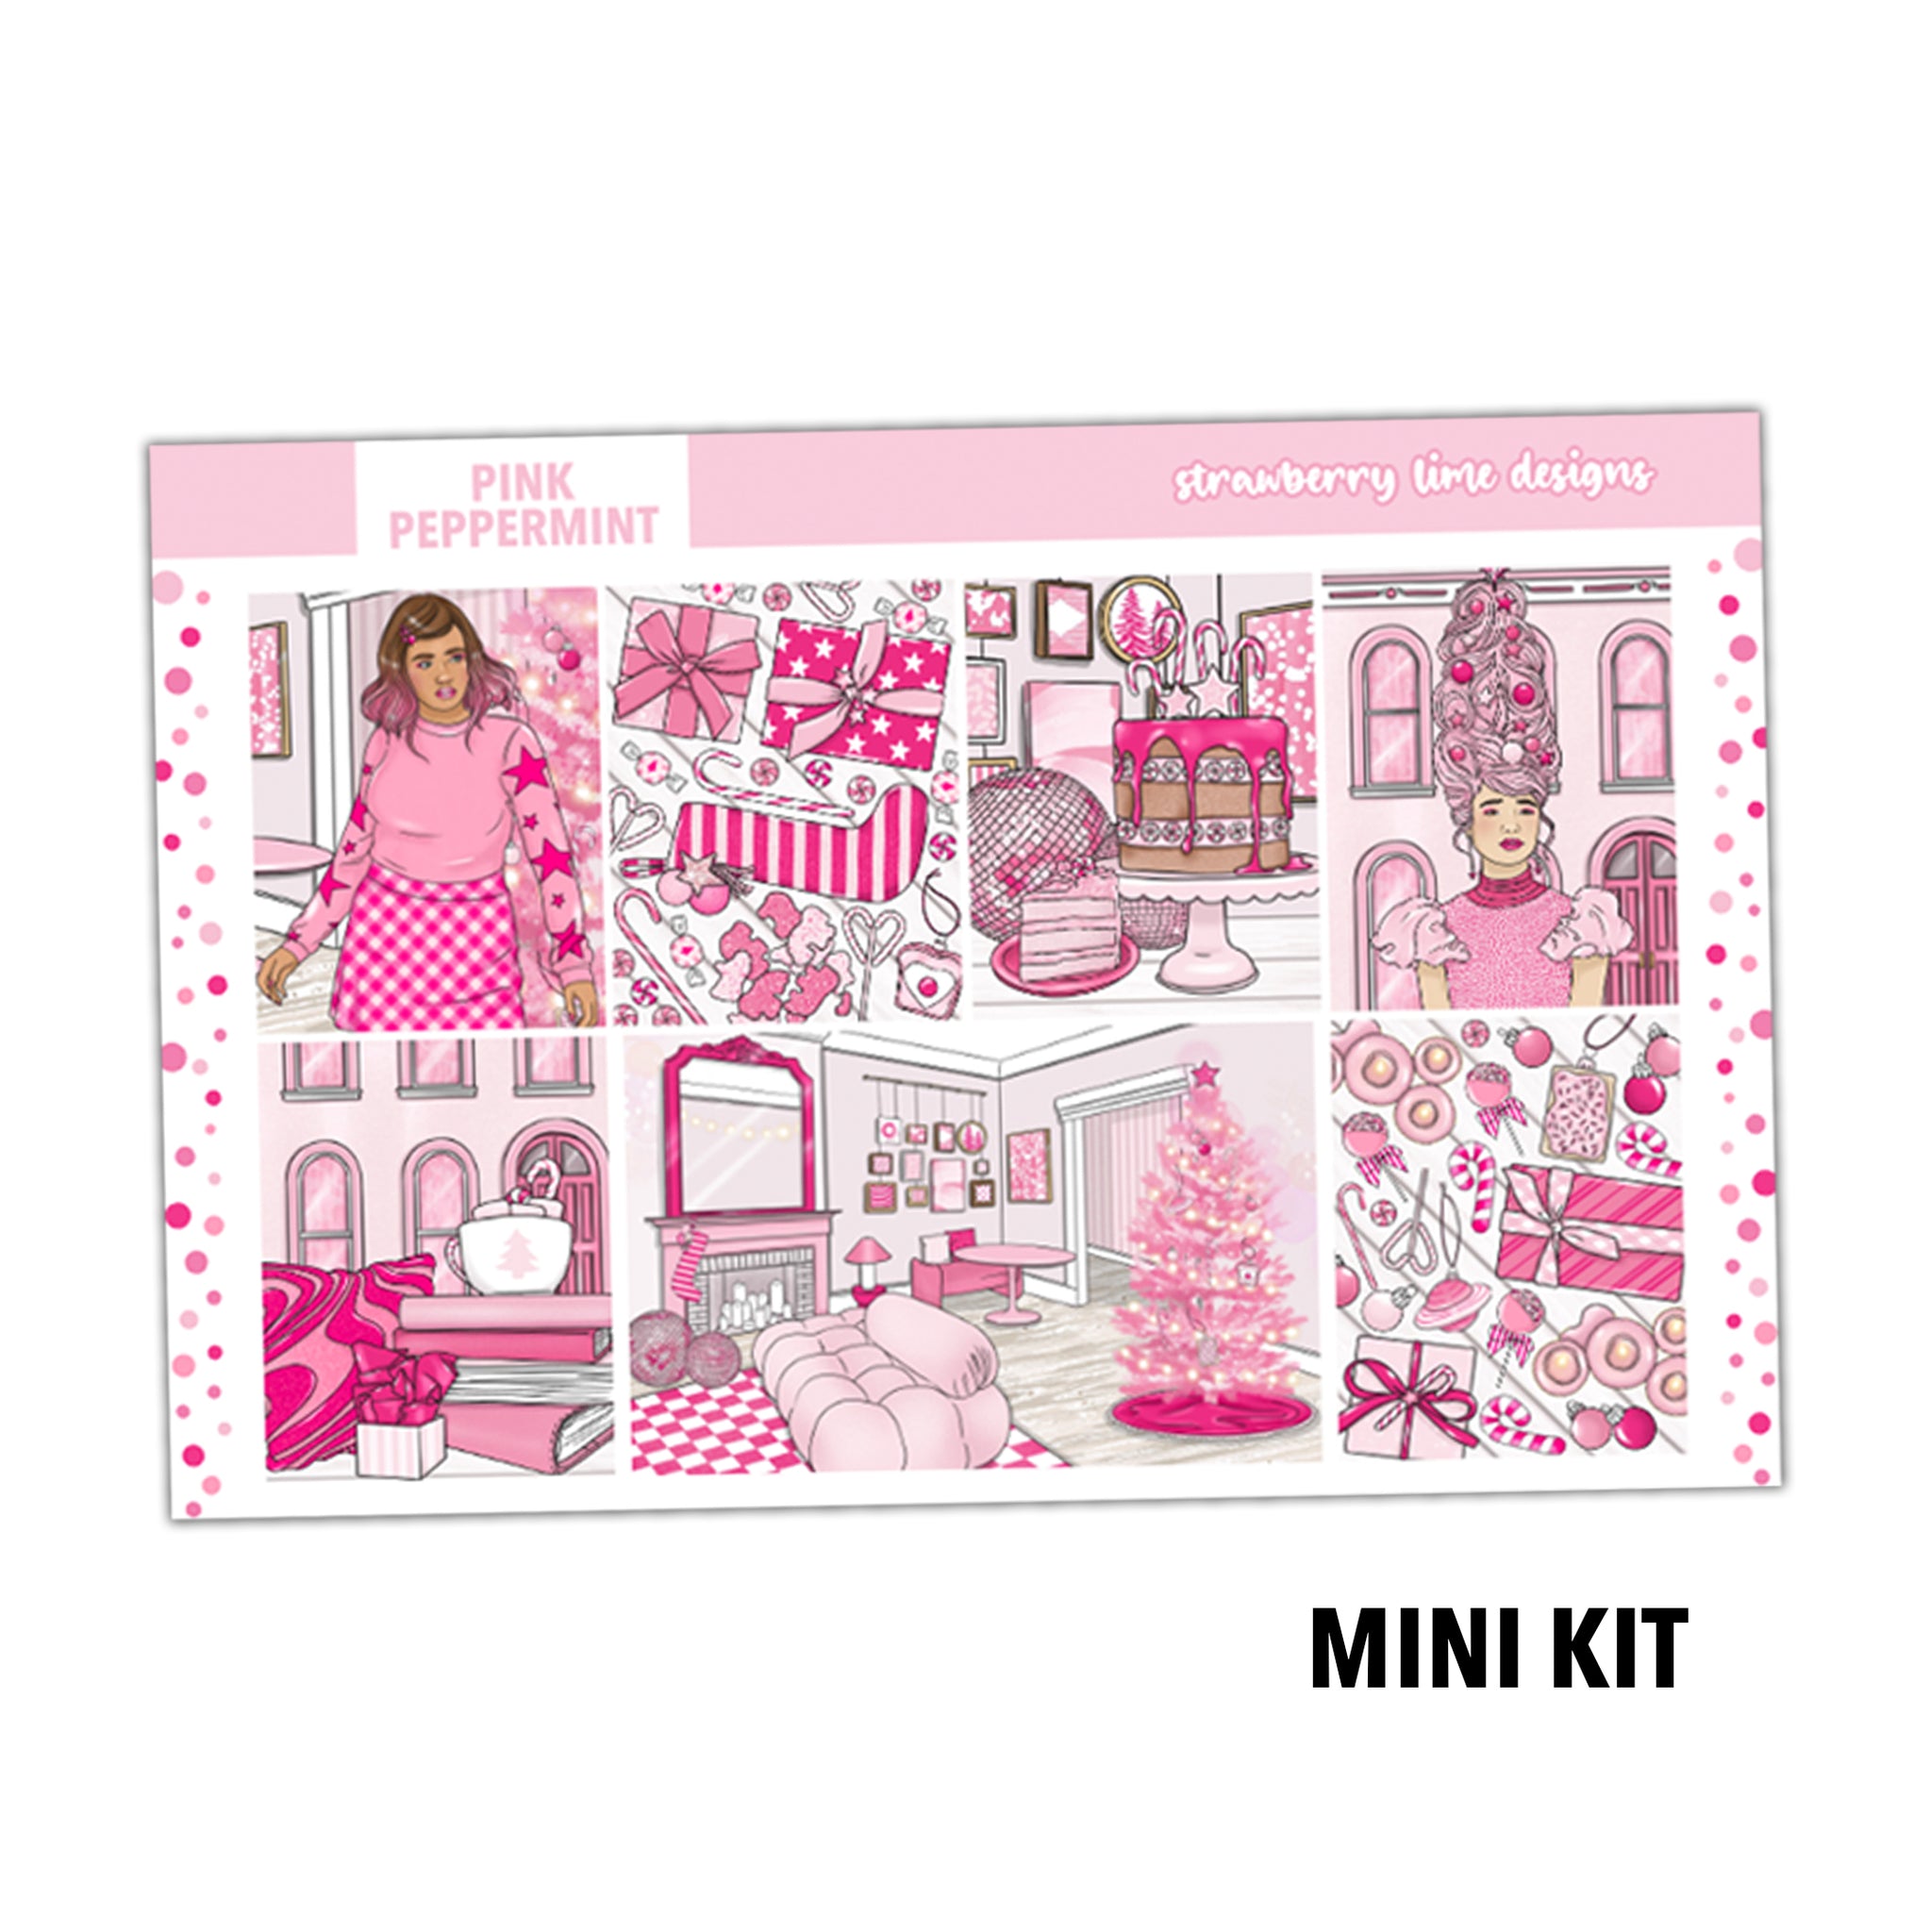 Pink Peppermint - Mini Kit